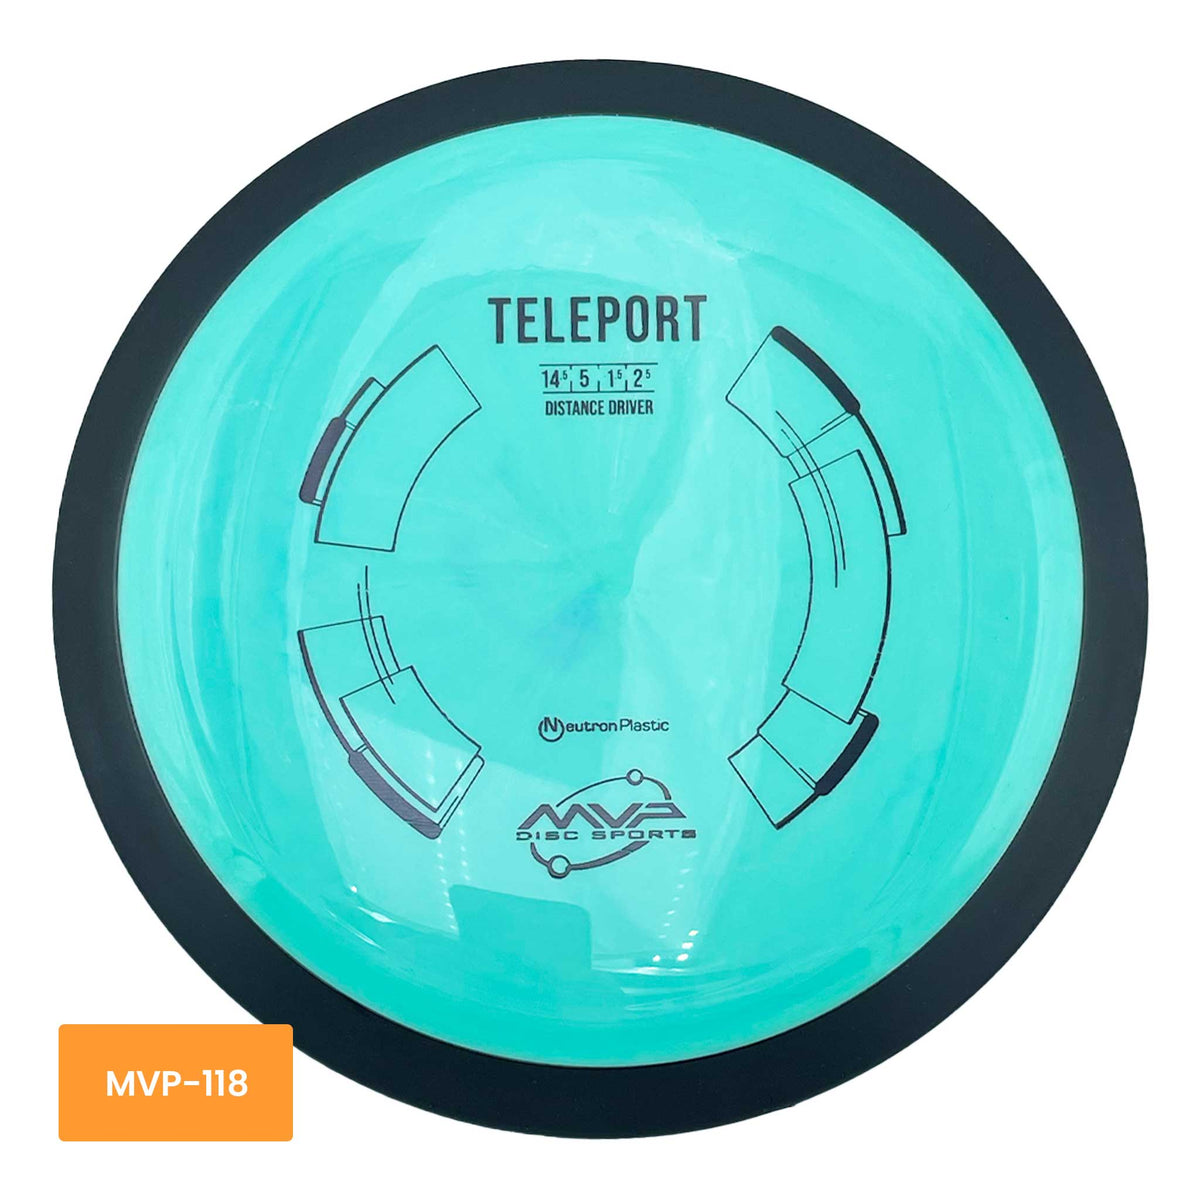 MVP Disc Sports Neutron Teleport distance driver - Teal